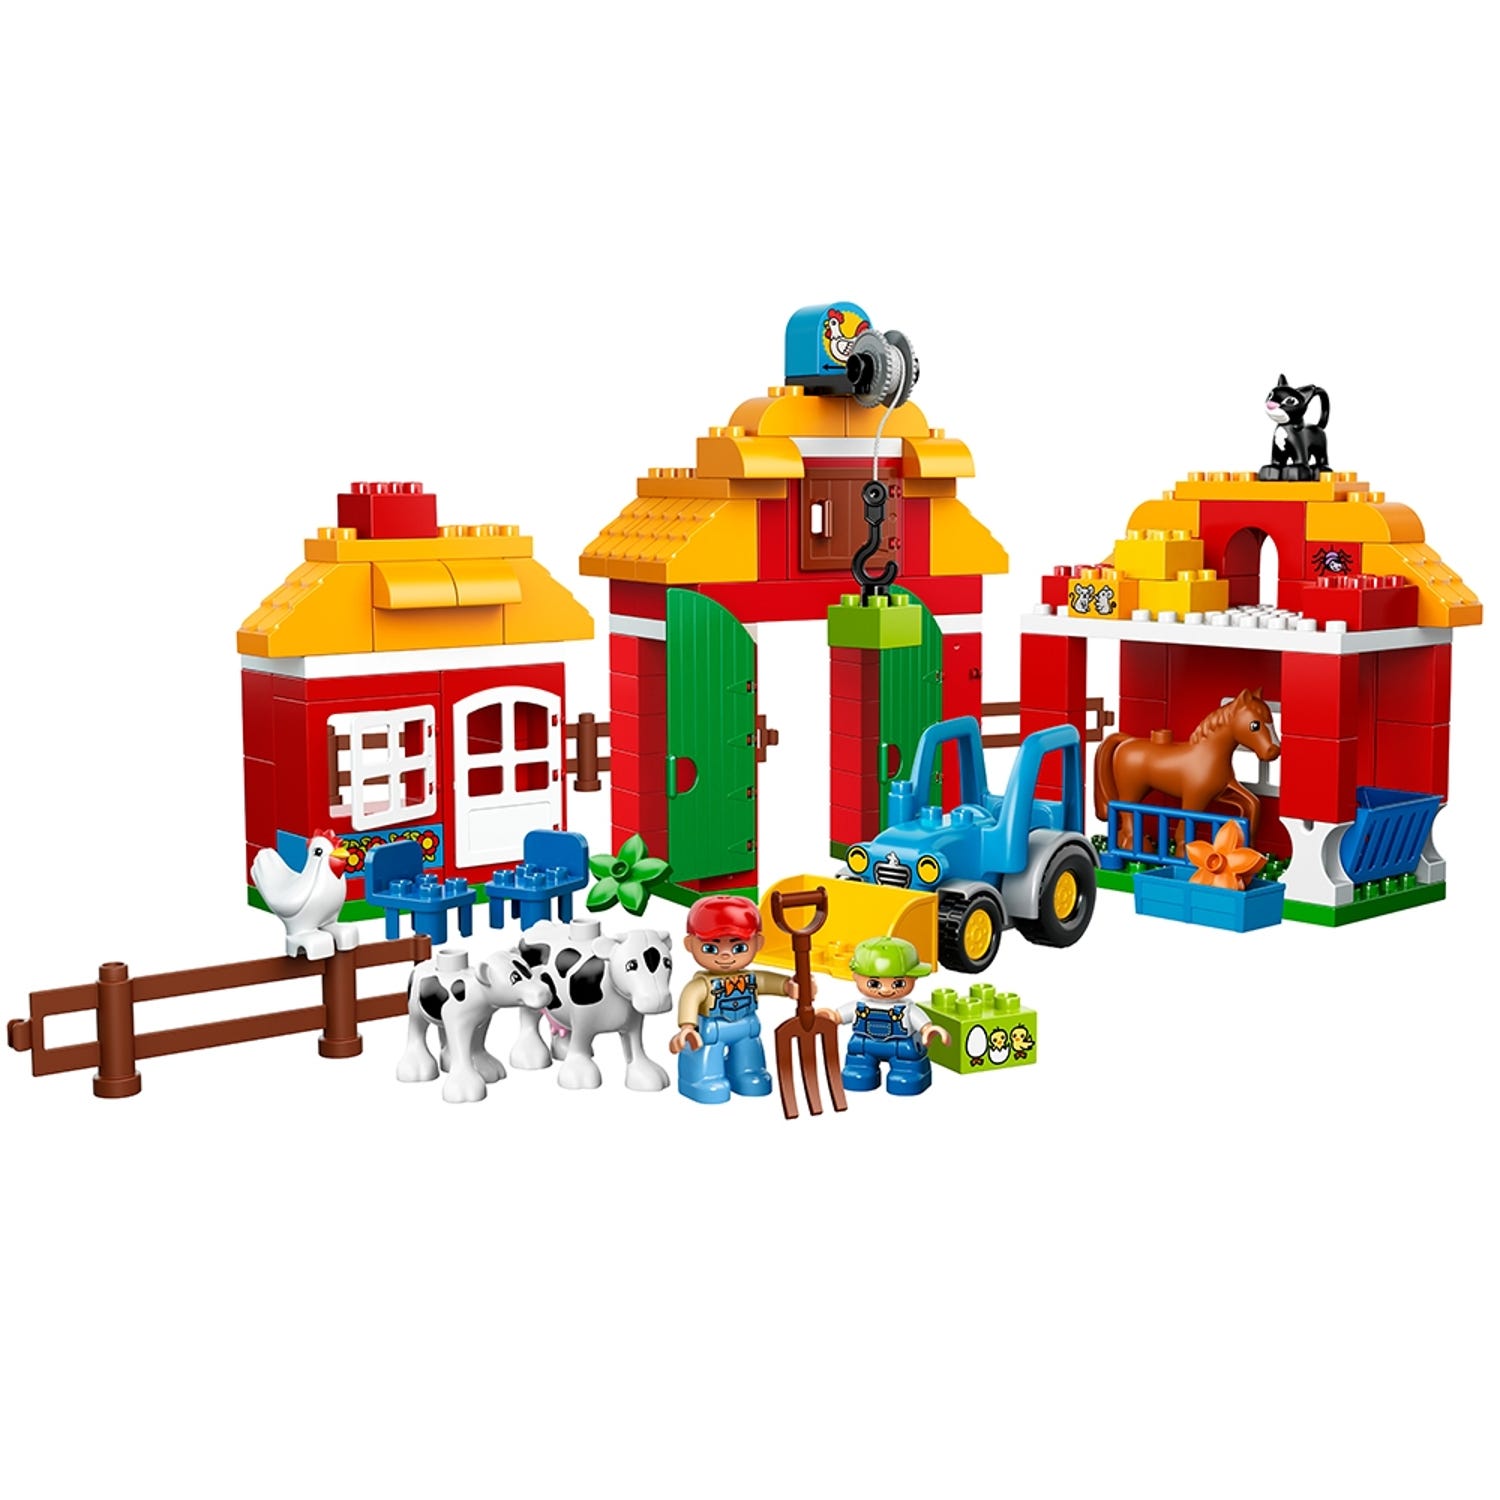 achter Wederzijds criticus Big Farm 10525 | DUPLO® | Buy online at the Official LEGO® Shop US